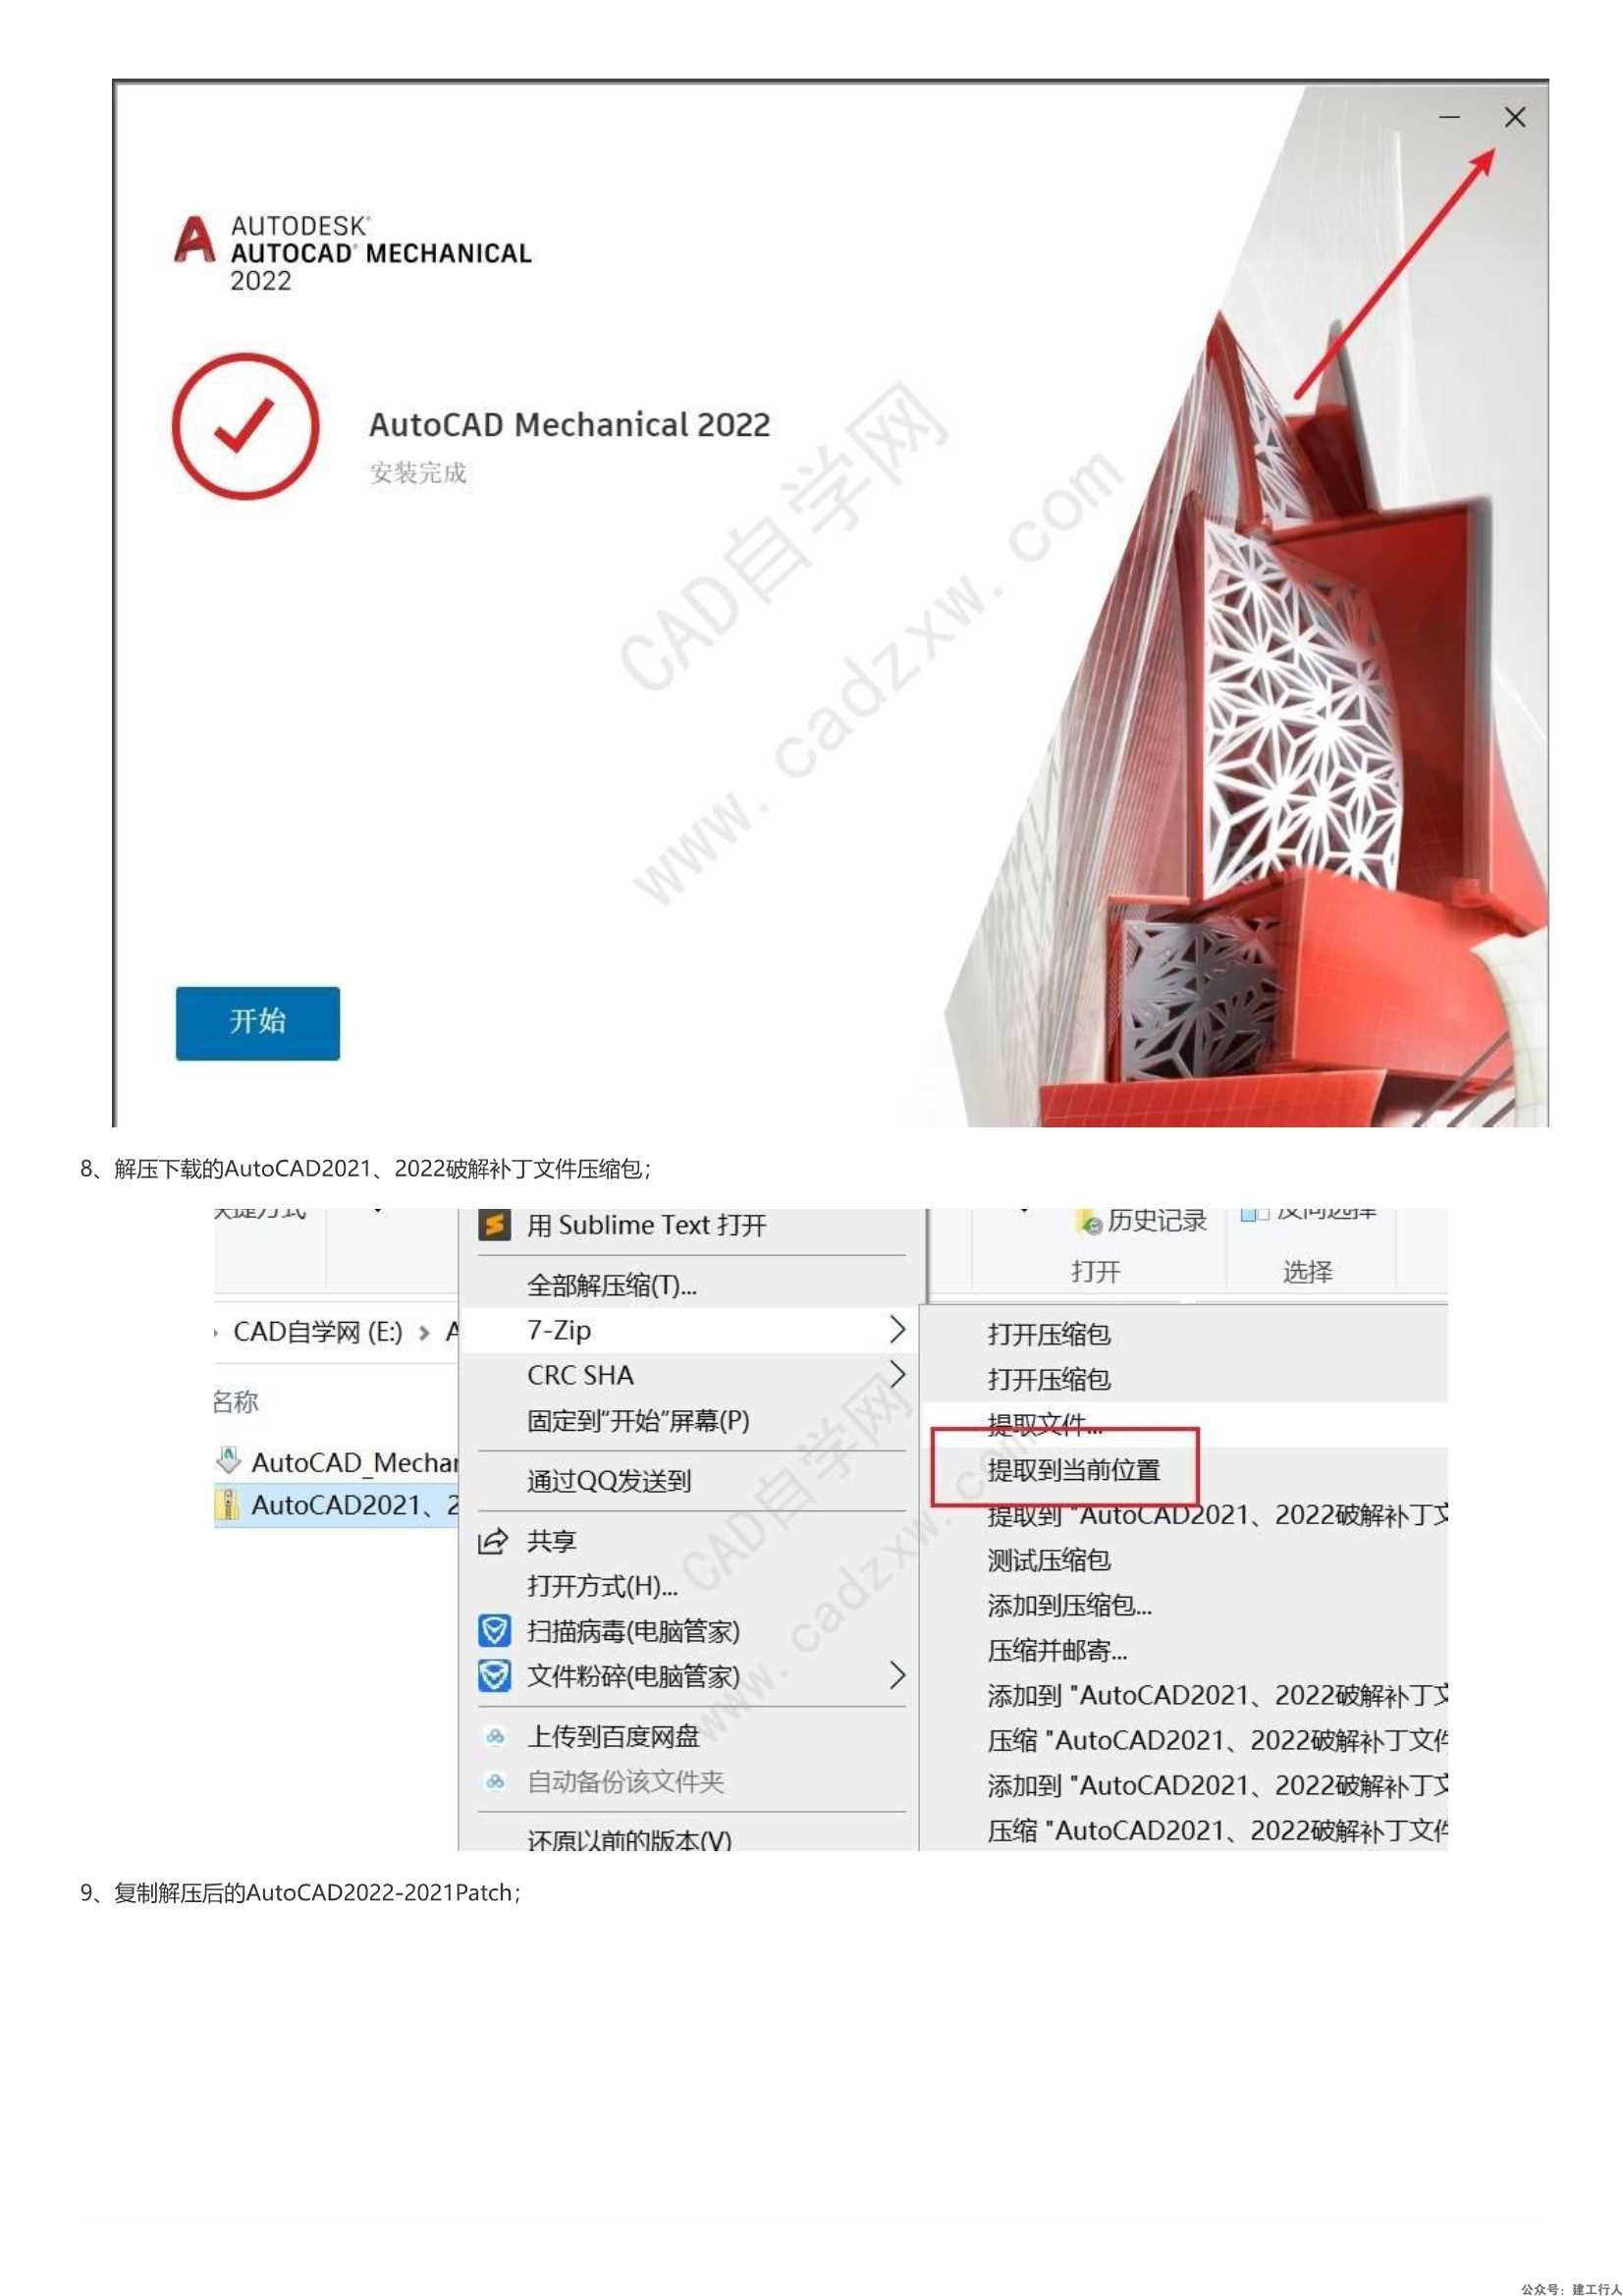 AutoCAD2022 中文机械版安装破解激活教程 _0006.Jpeg